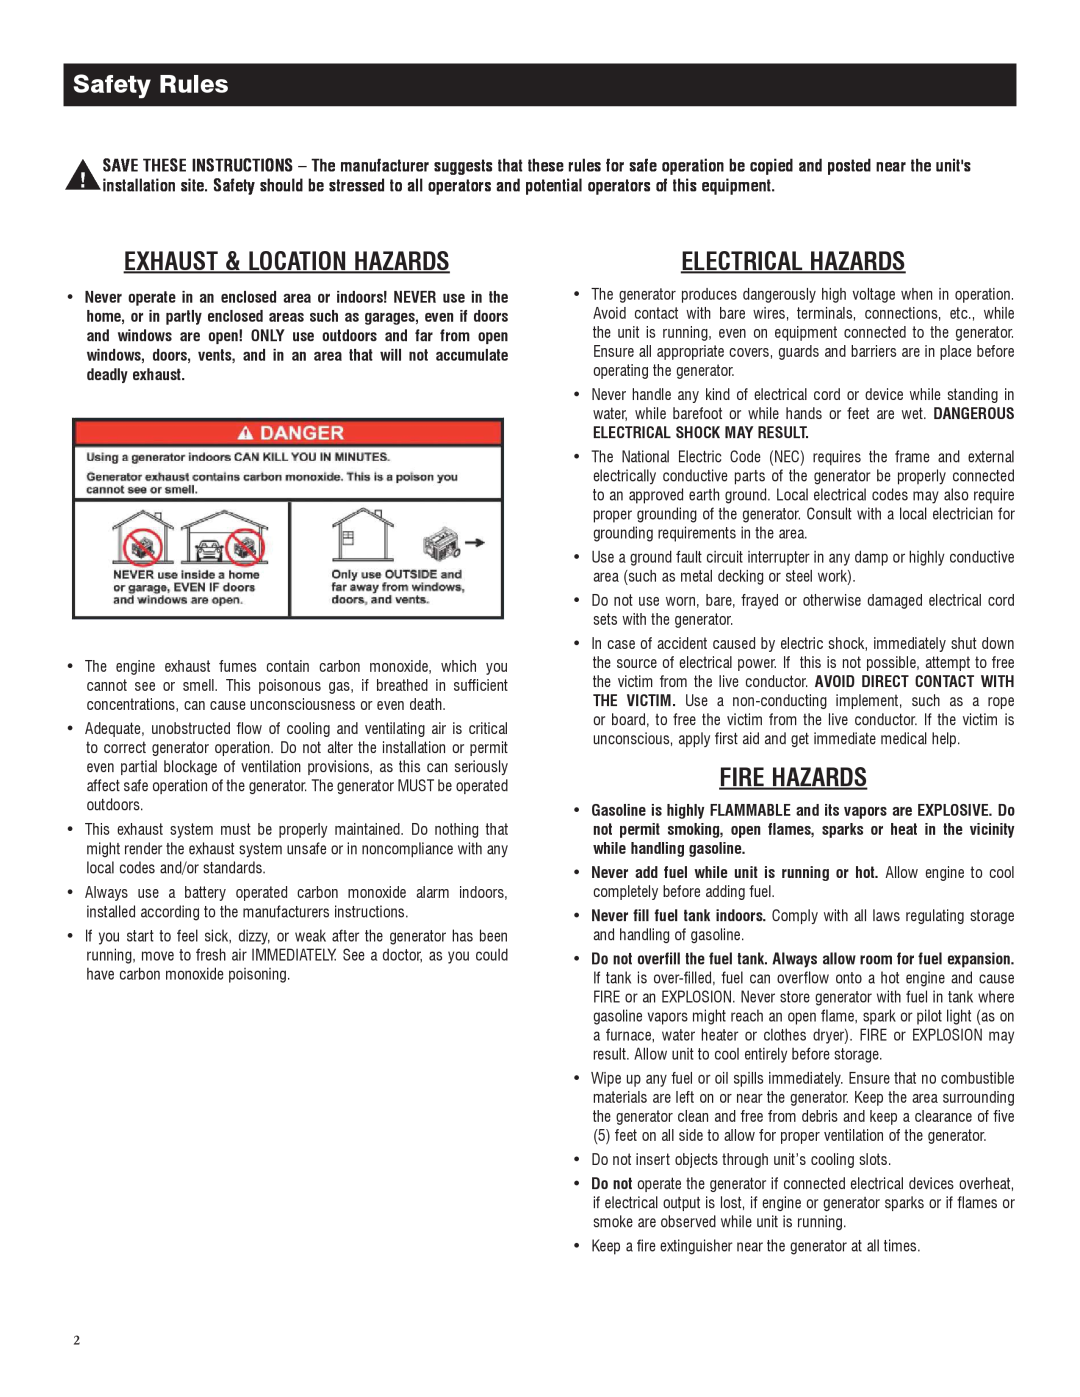 Generac 005734-0, 005735-0 owner manual Safety Rules, Exhaust & Location Hazards, Fire Hazards, Electrical Hazards 